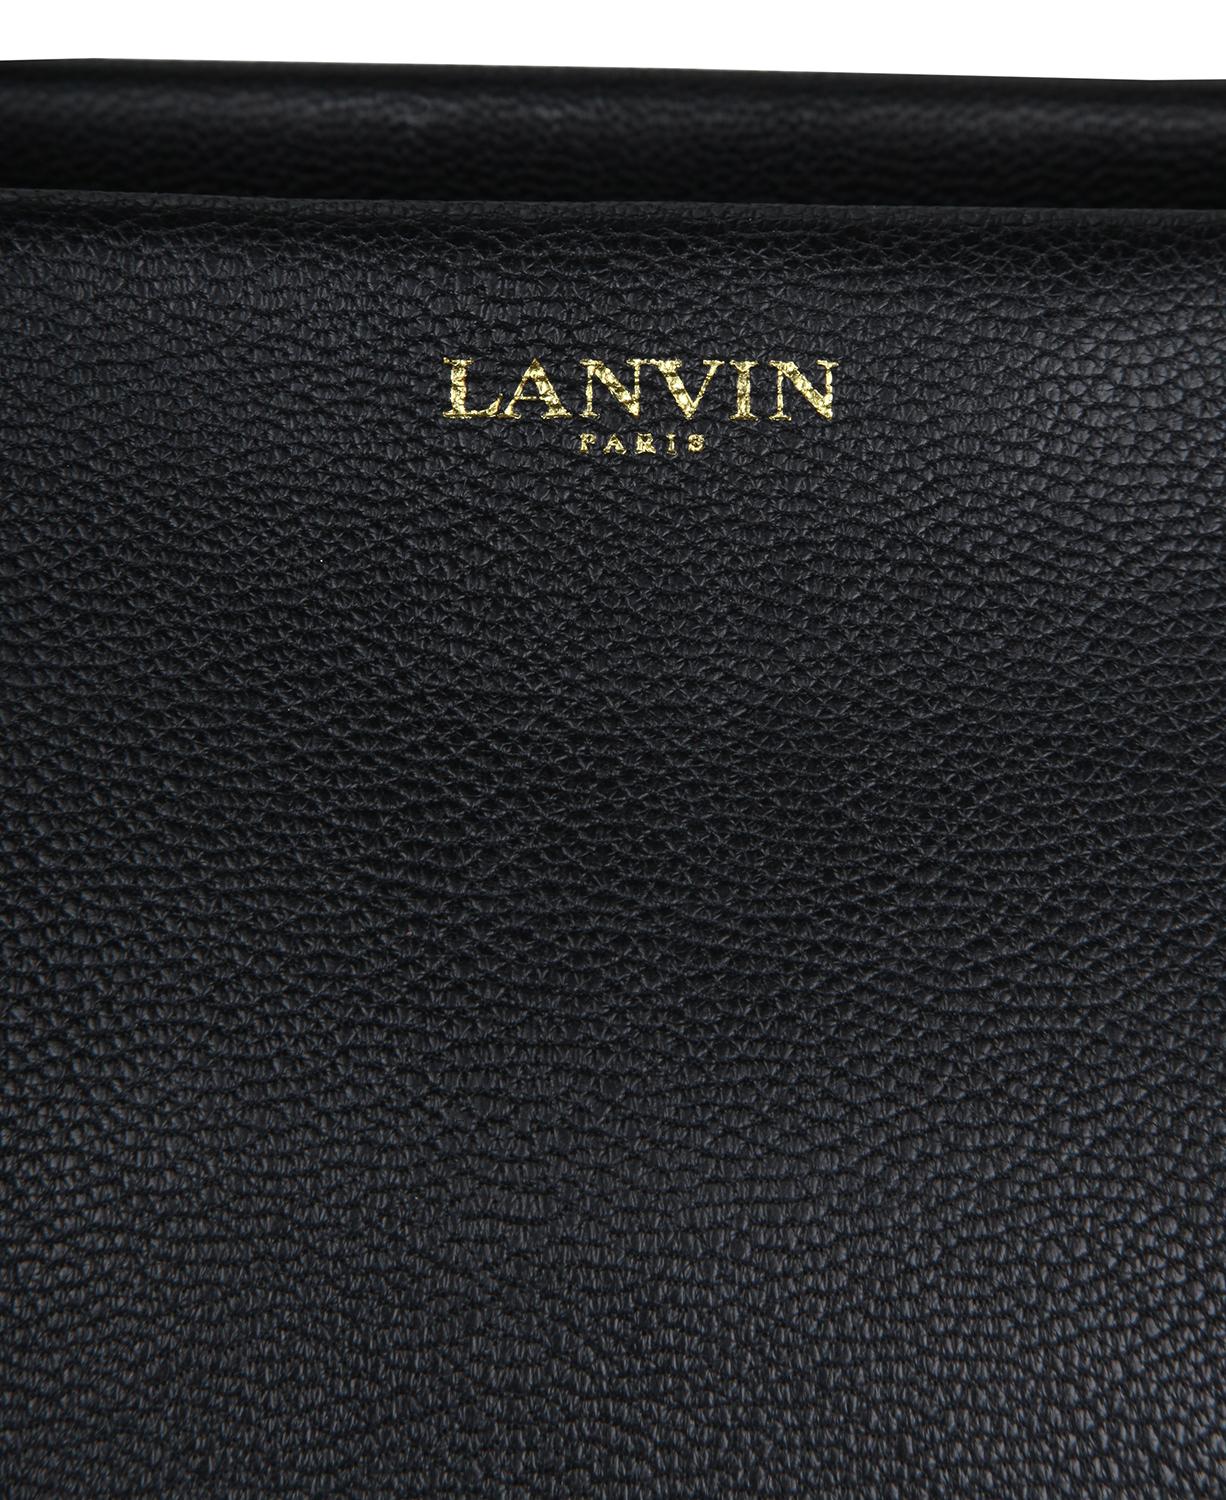 lanvin trilogy bag